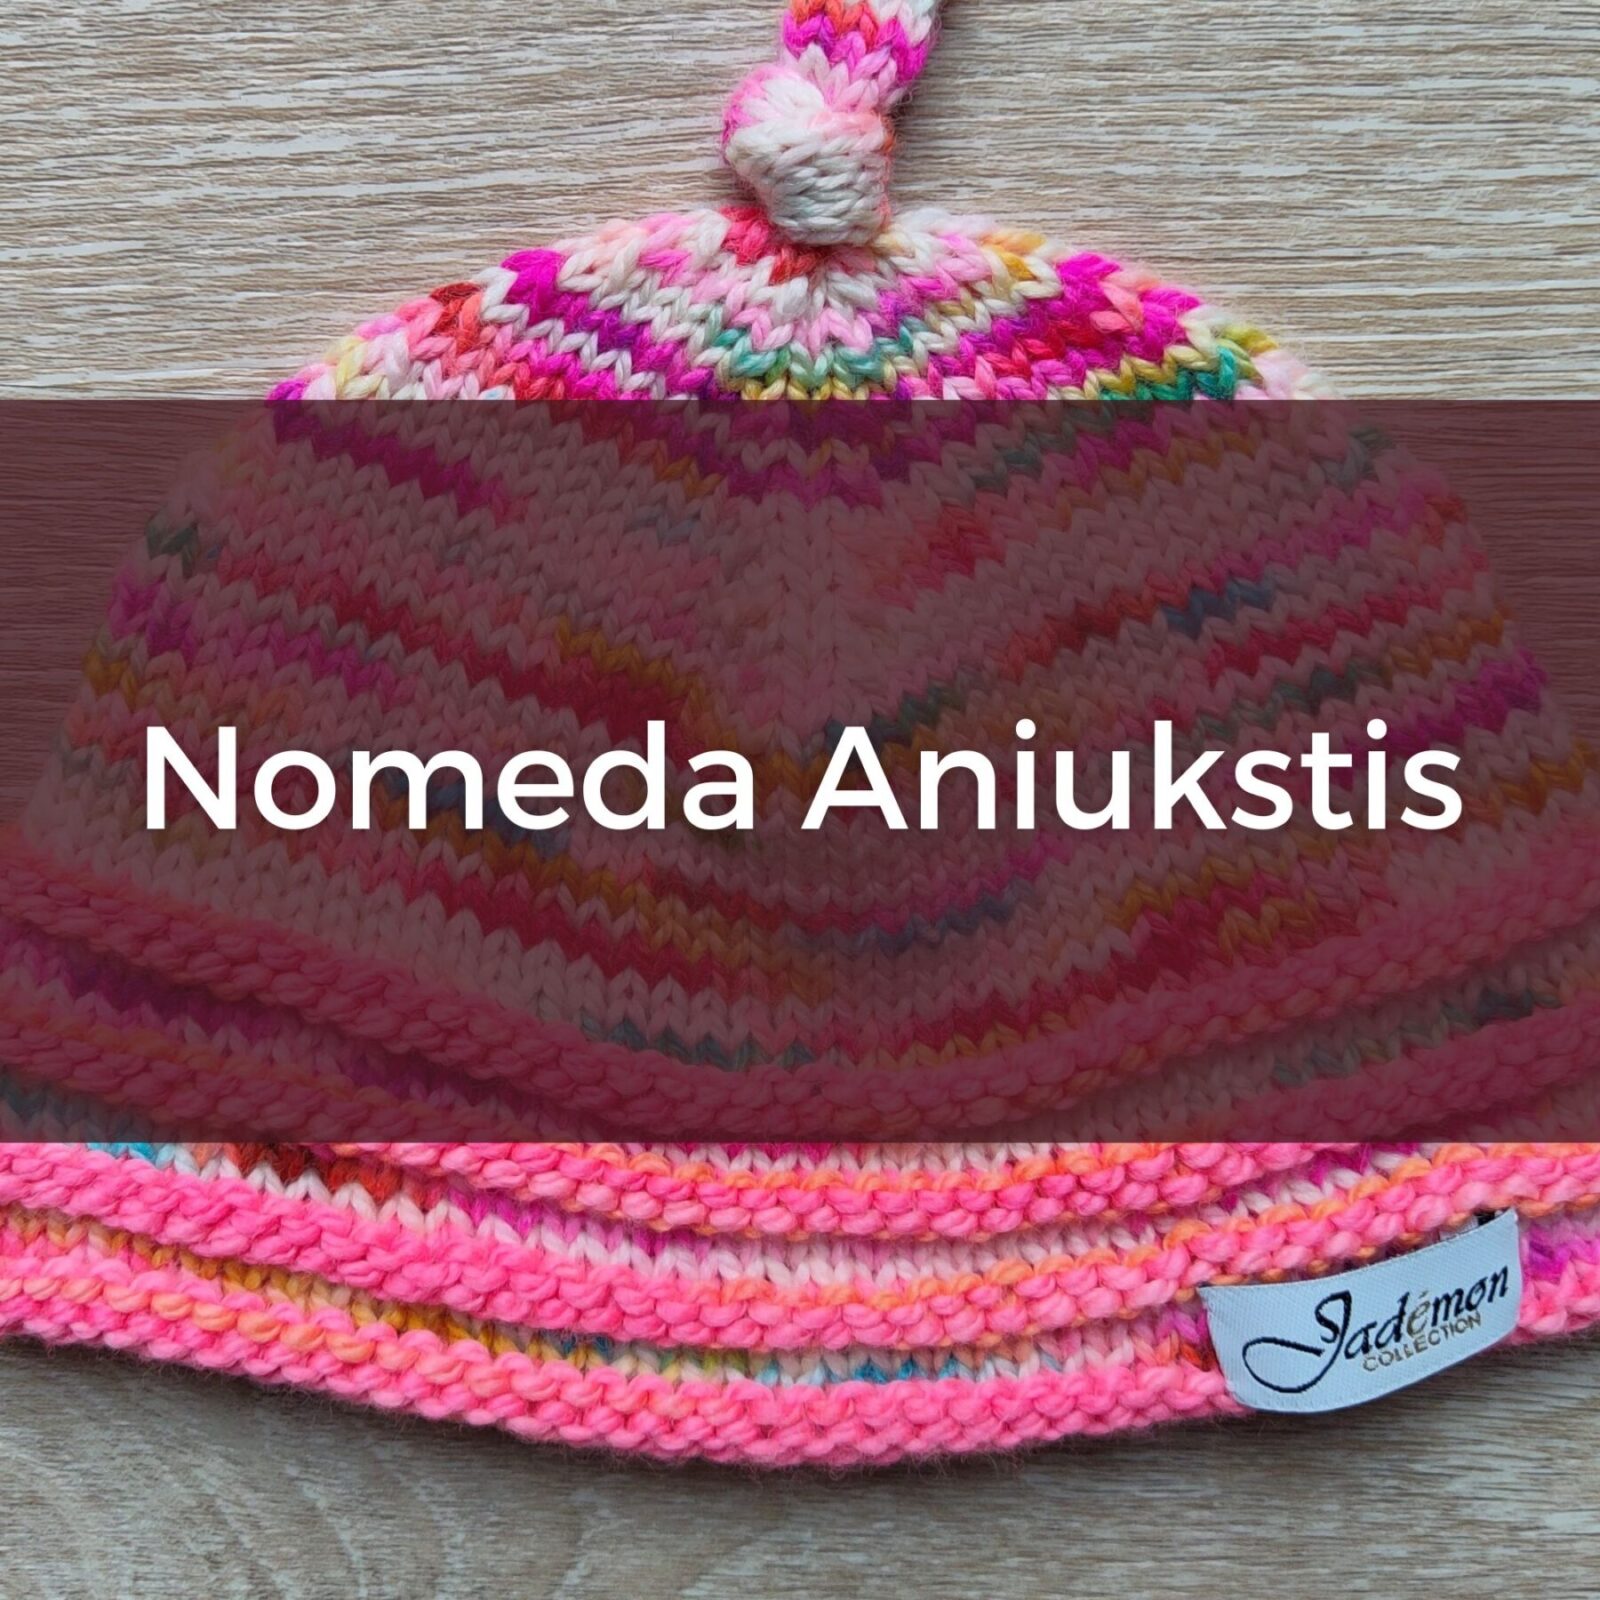 Nomeda Aniukstis, fiber (hats and purses)